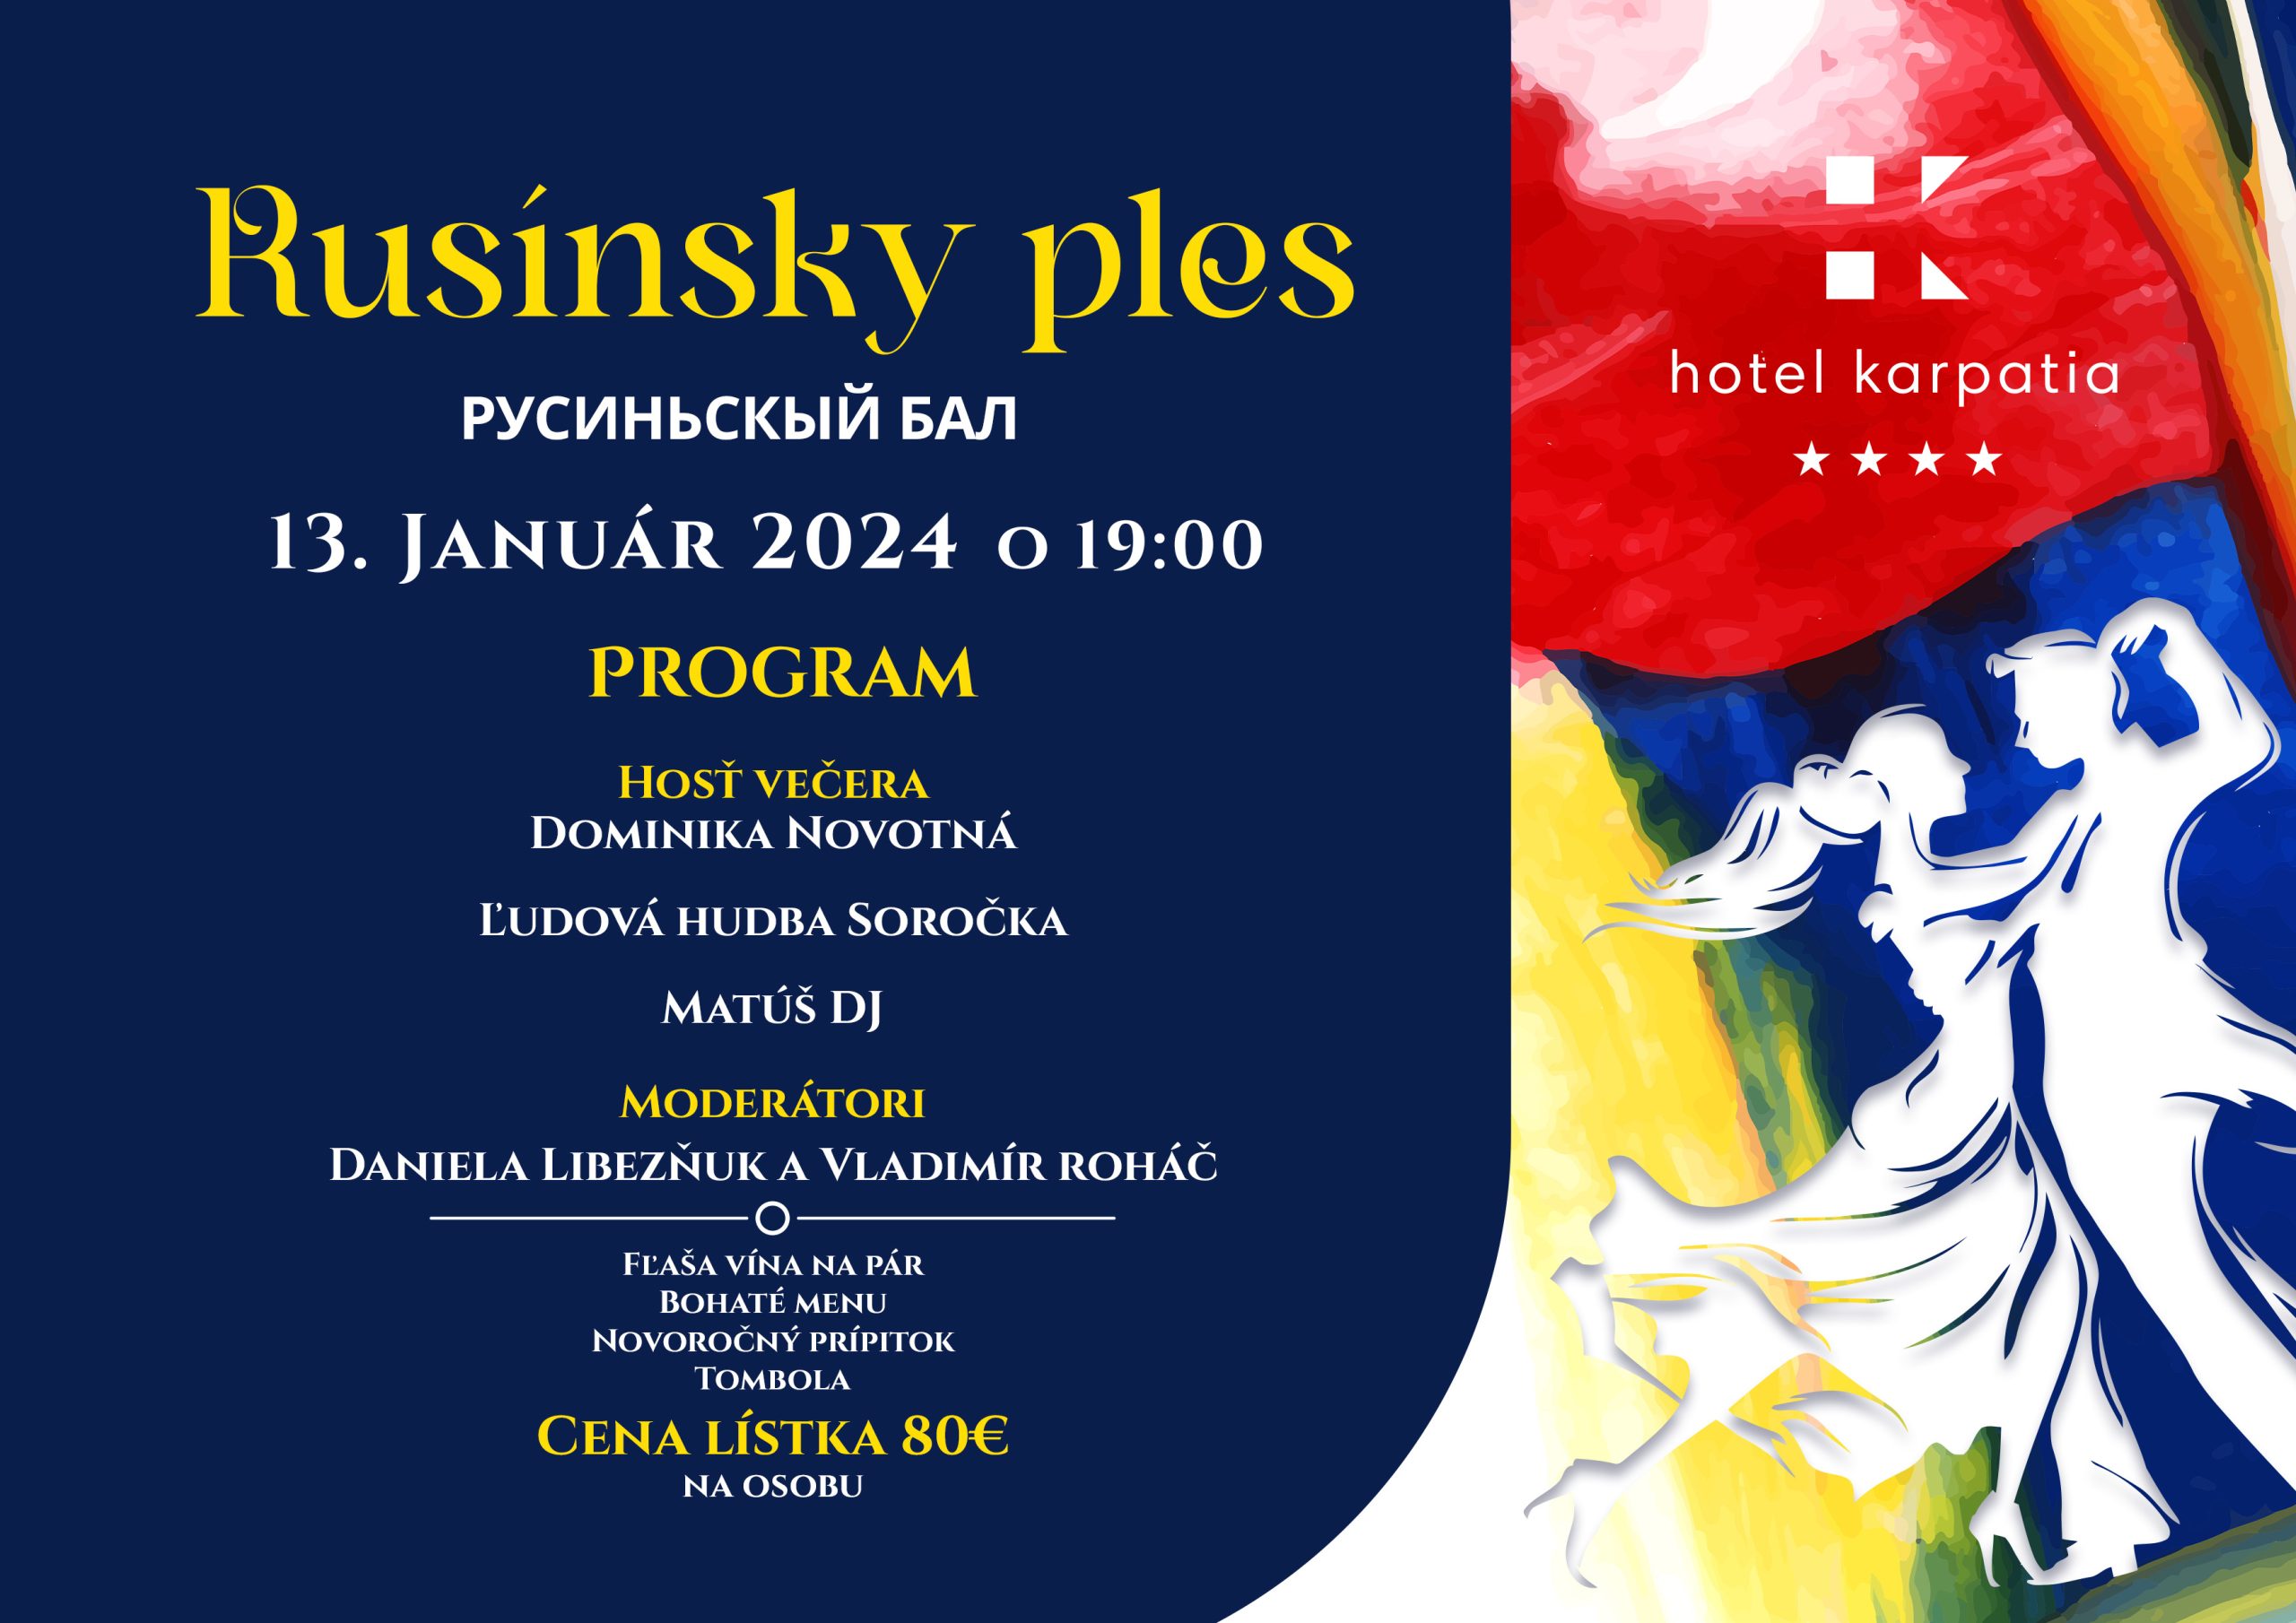 Rusnsky ples 2024 Humenn - 1. ronk